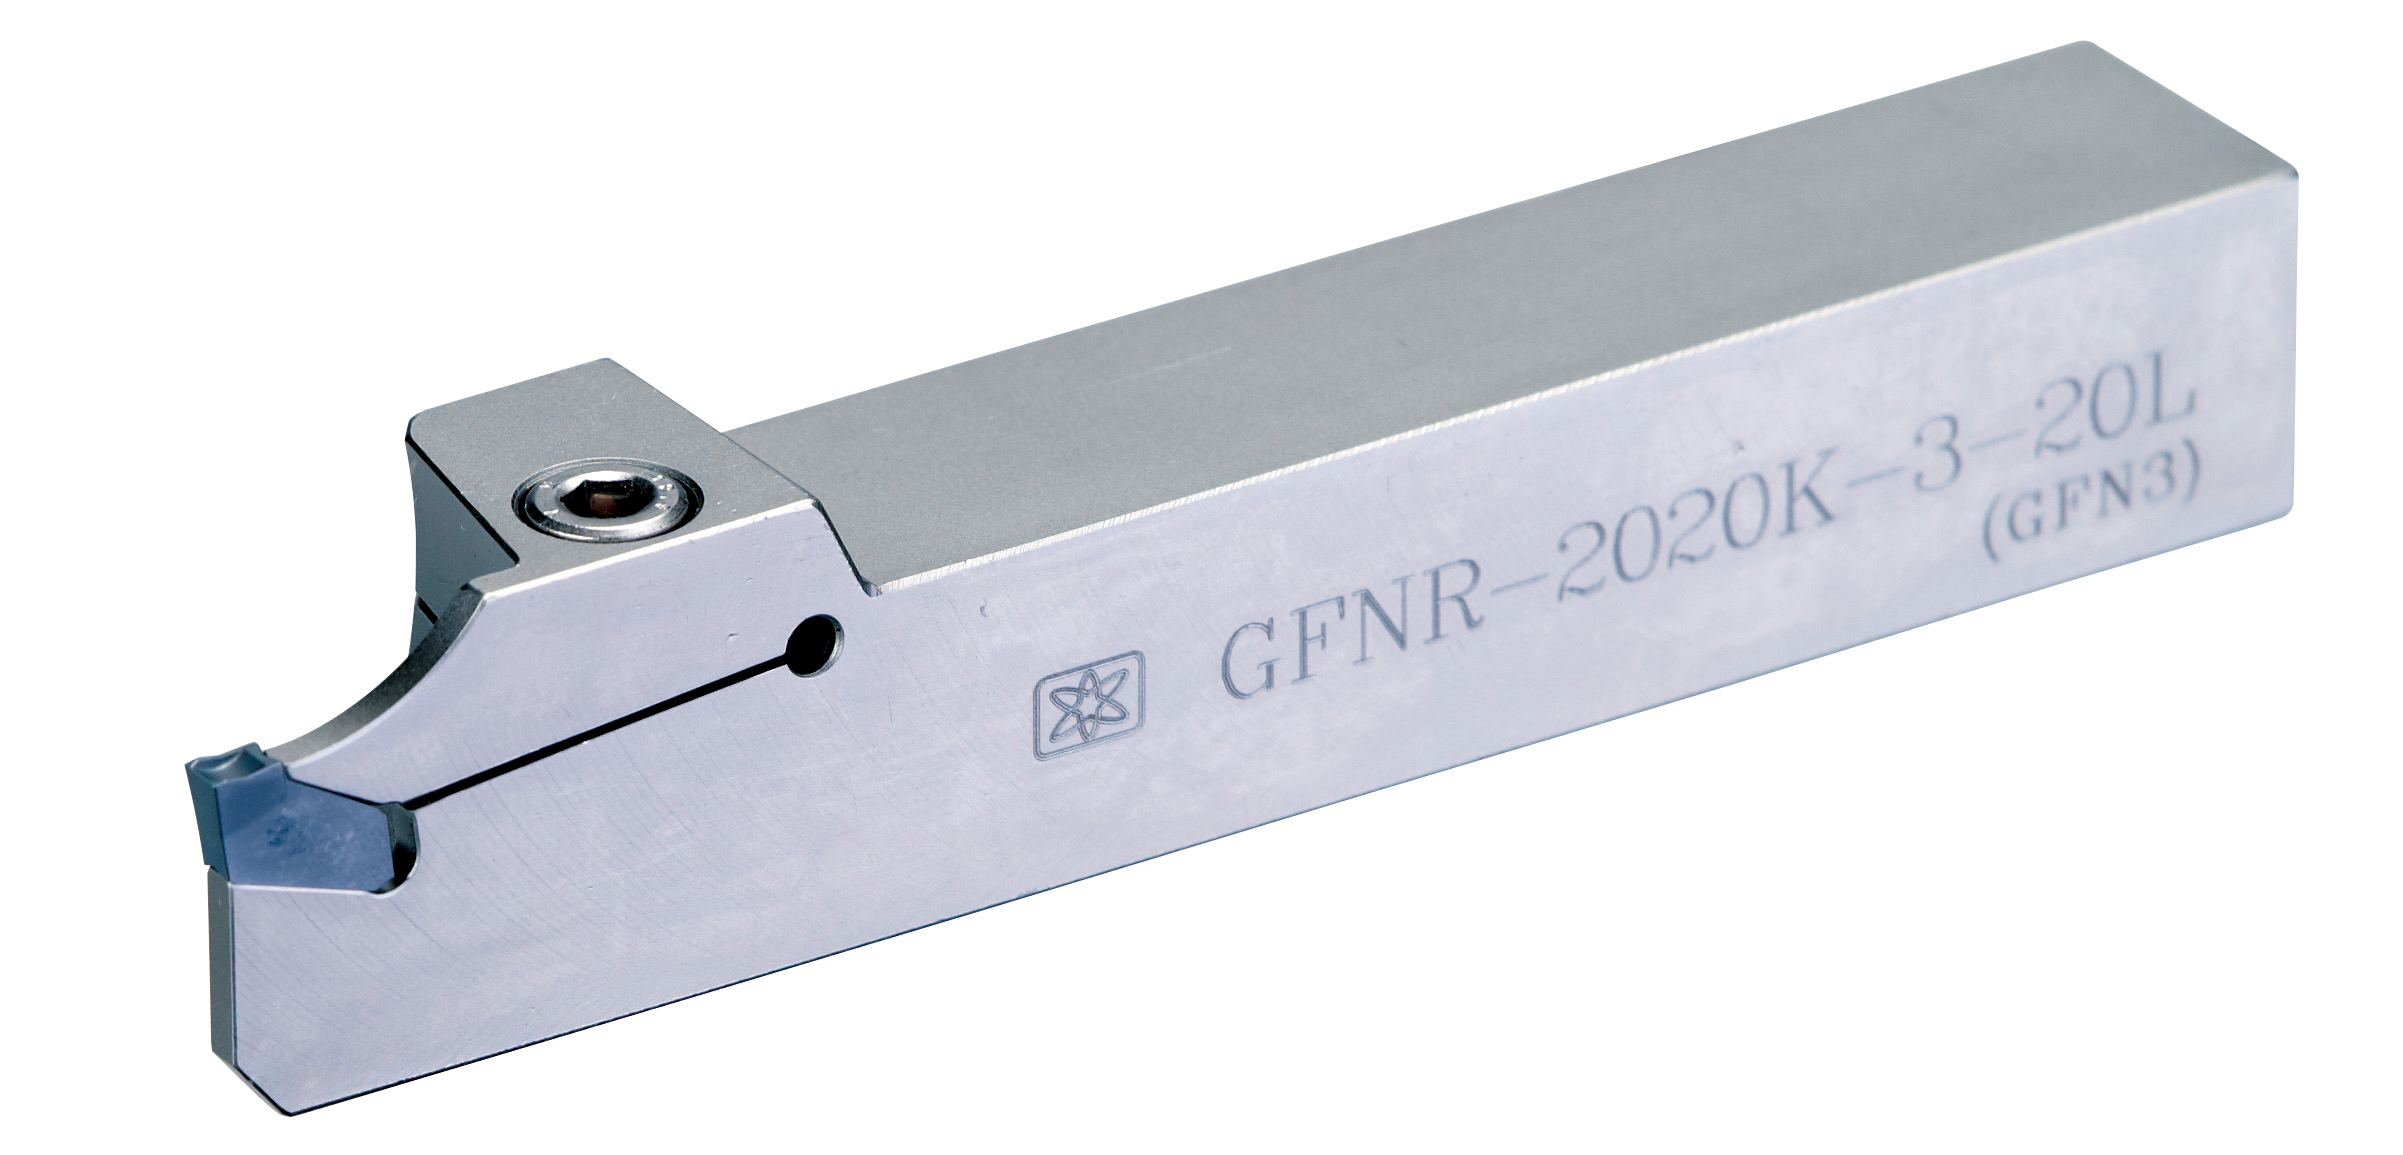 GFNR (GFN2 / GFN3) External Grooving Tool Holder